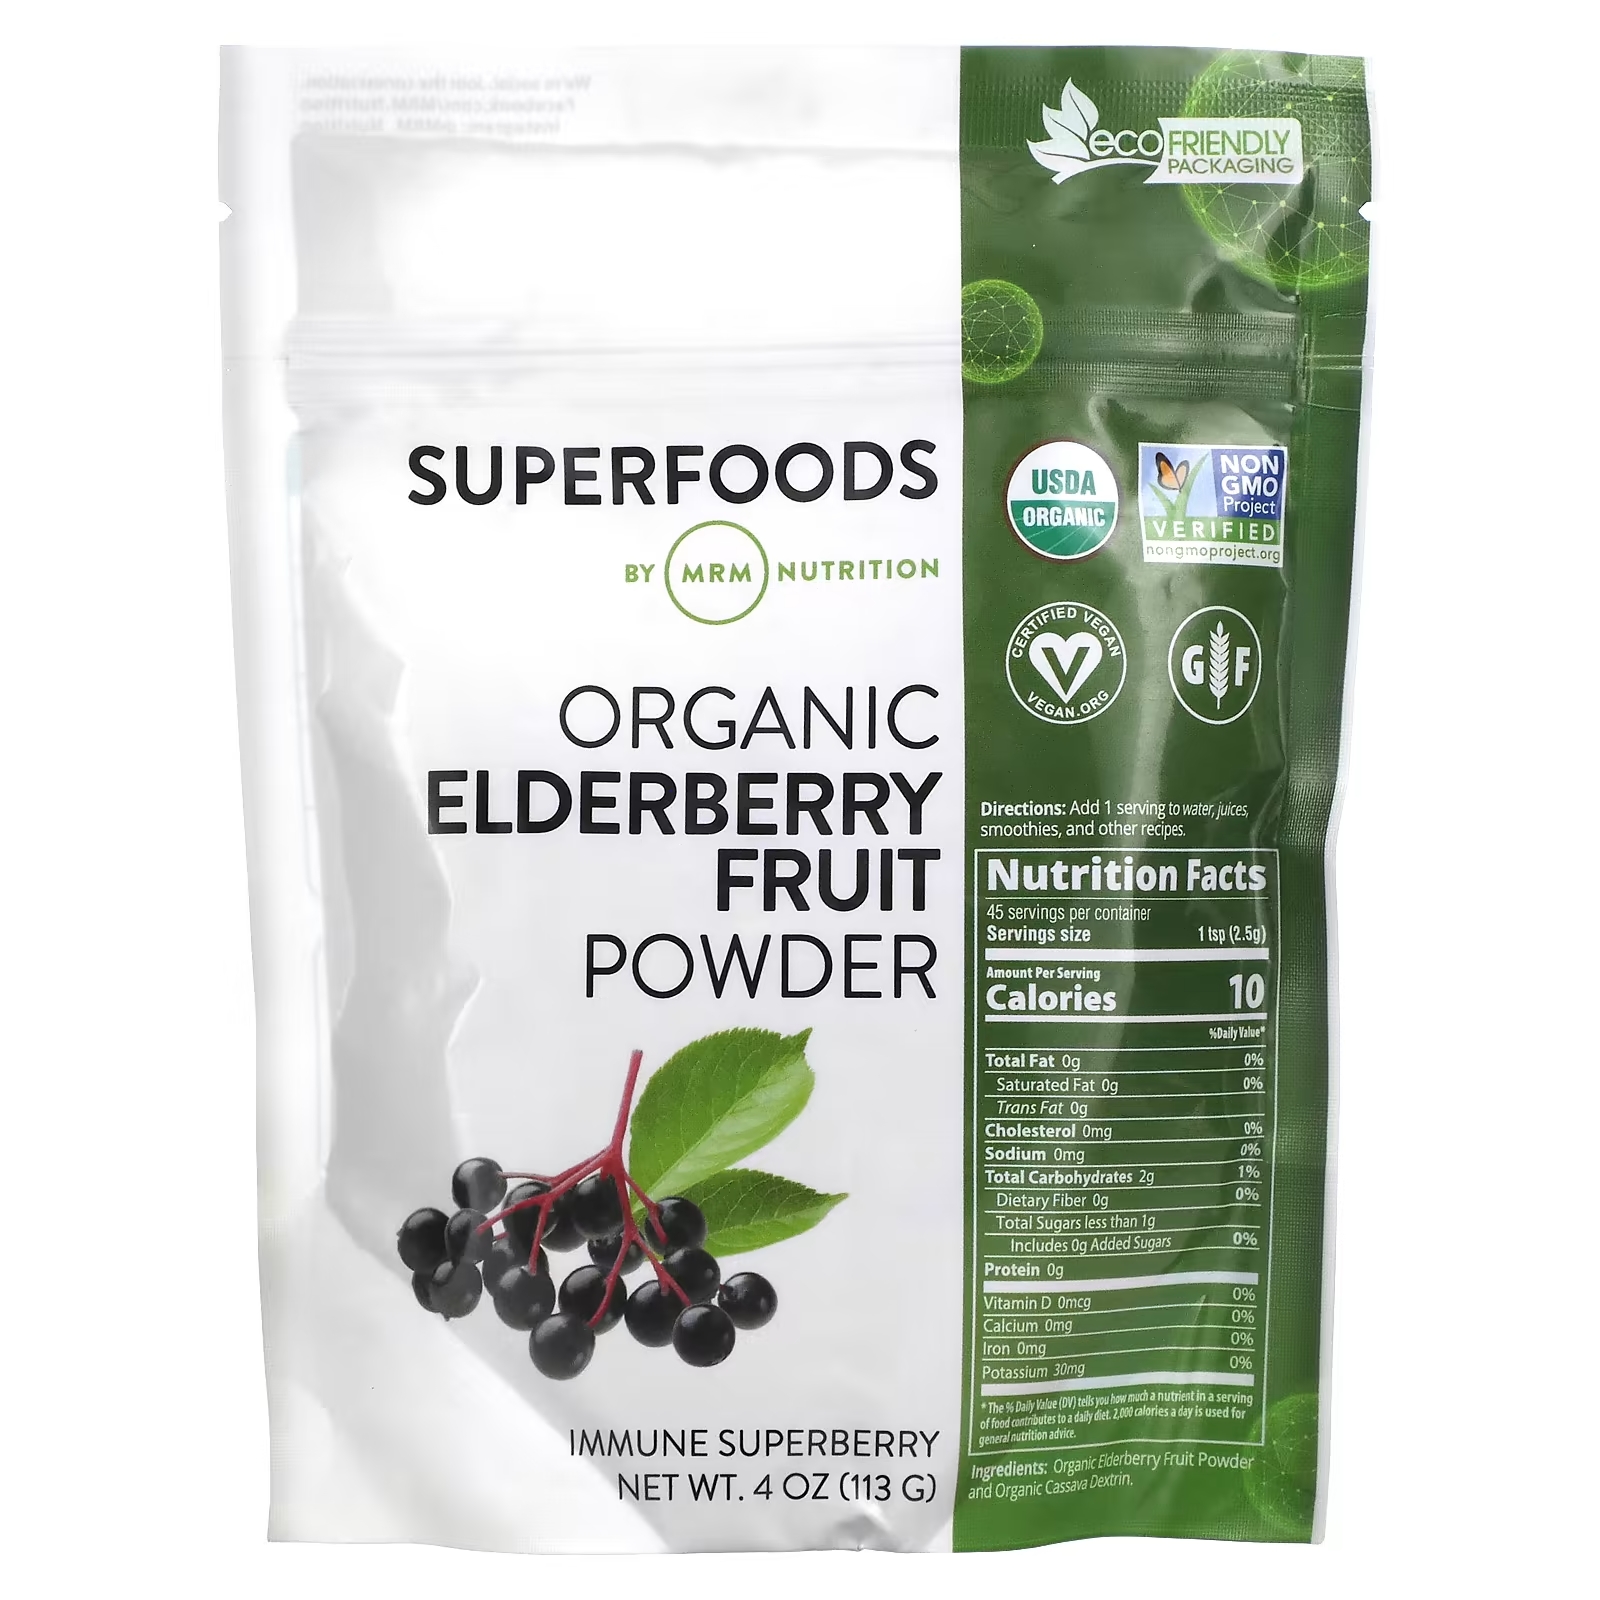 MRM Nutrition Organic Elderberry Fruit Powder, 113 г mrm nutrition organic elderberry fruit powder 4 oz 113 g